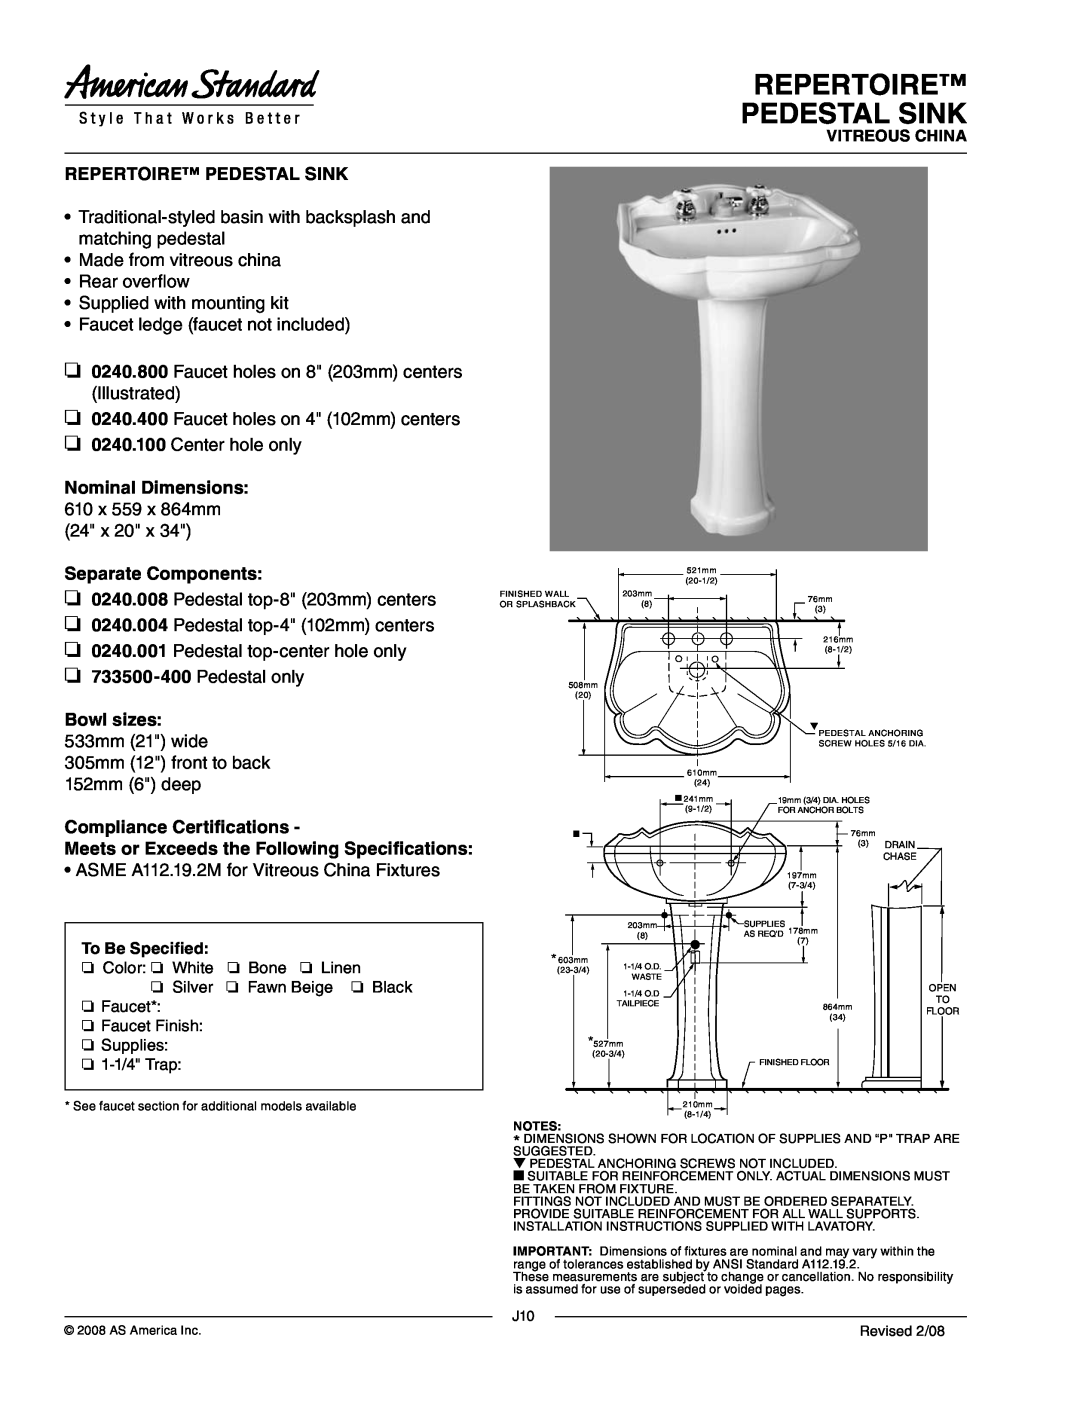 American Standard 0240.400 dimensions Repertoire Pedestal Sink, Nominal Dimensions 610 x 559 x 864mm, Separate Components 